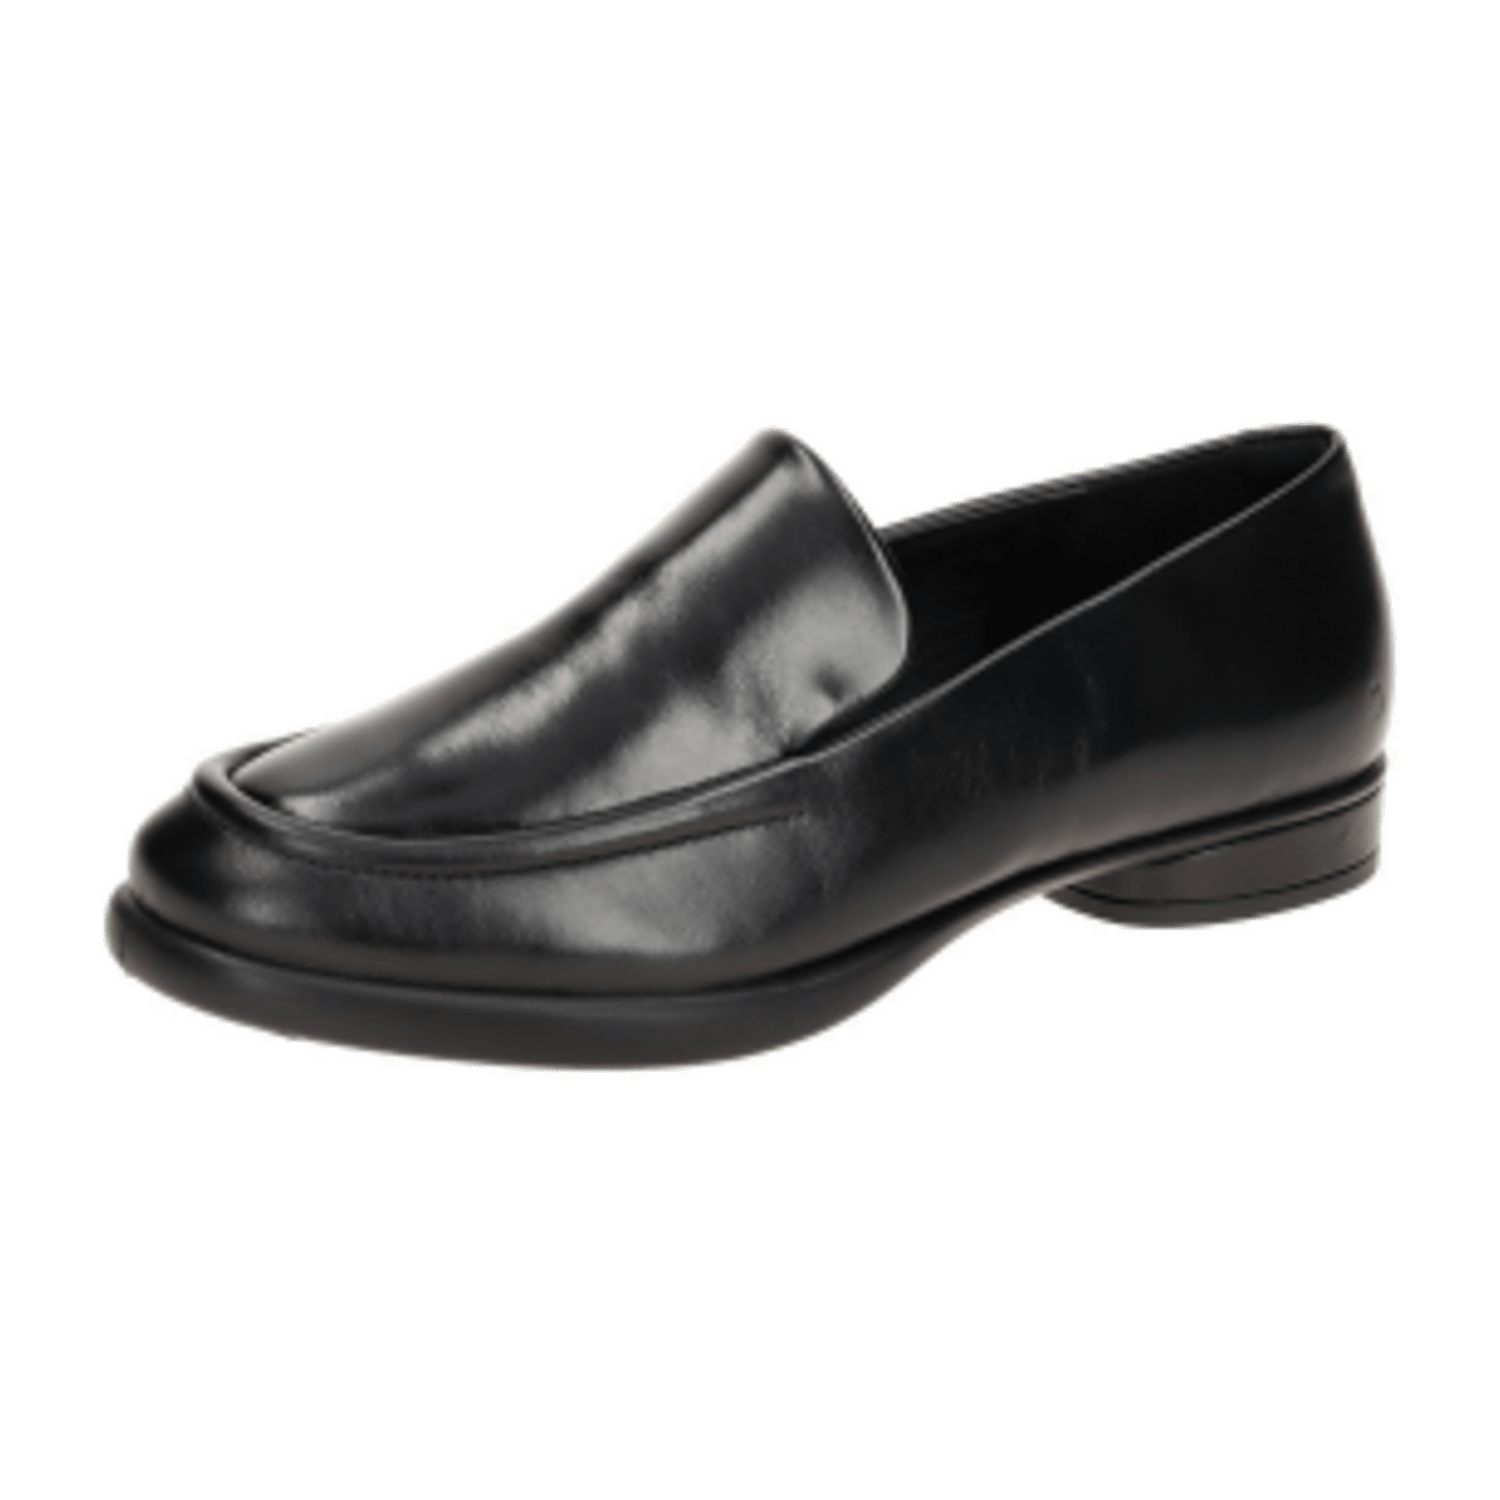 Ecco Sculpted Slipper Schuhe schwarz Loafer 222313